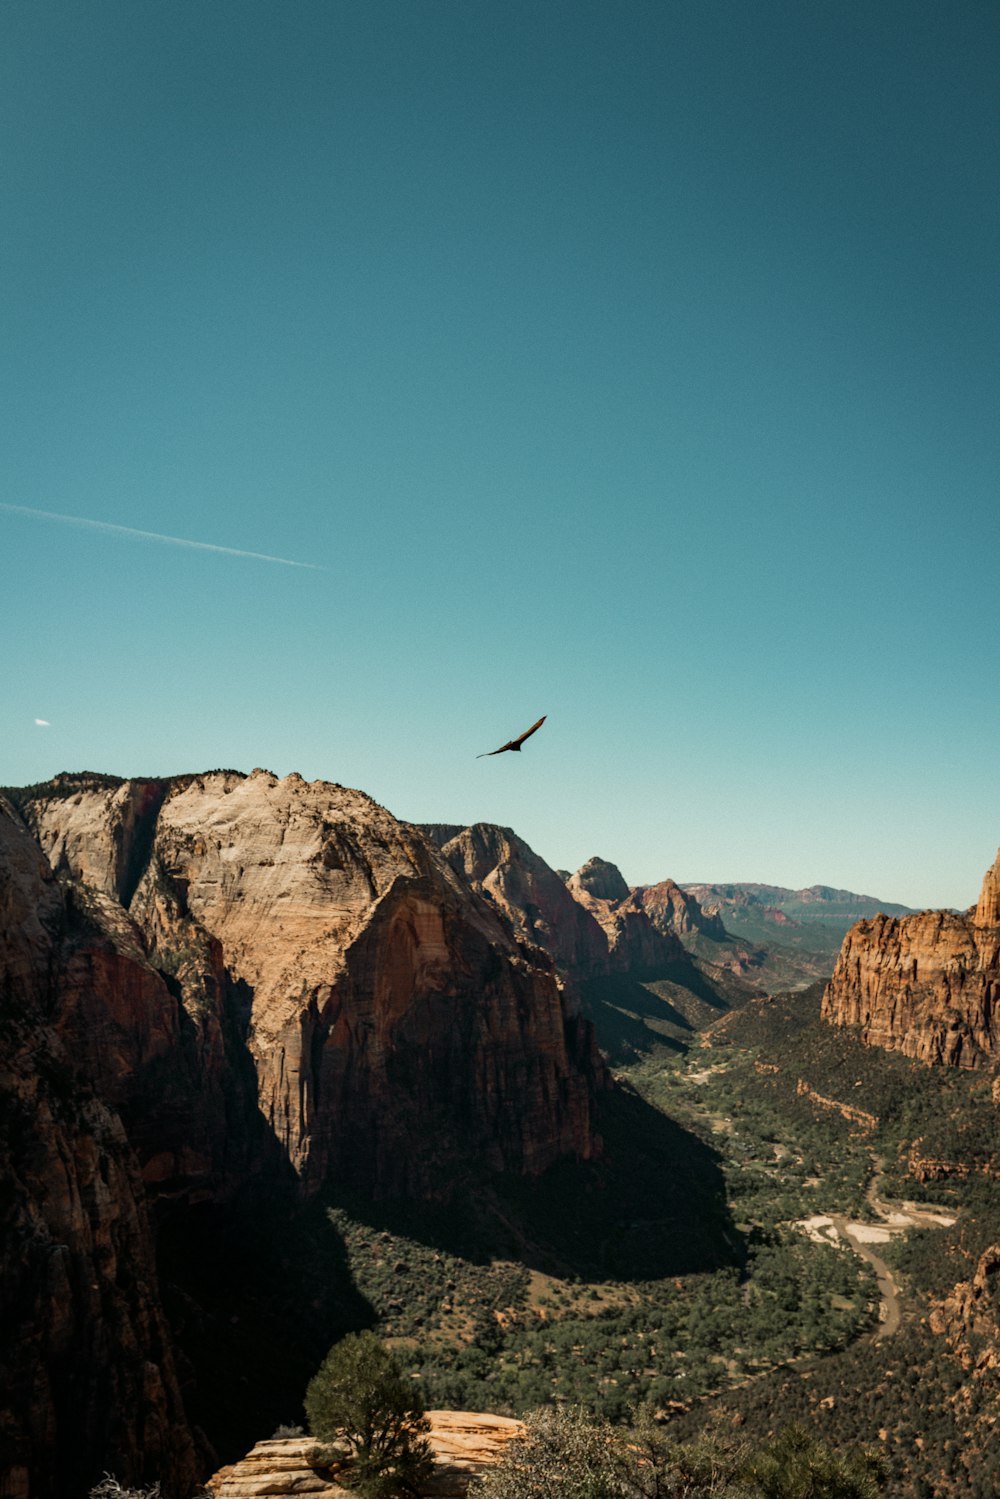 a bird flying over a mountain range in the desert